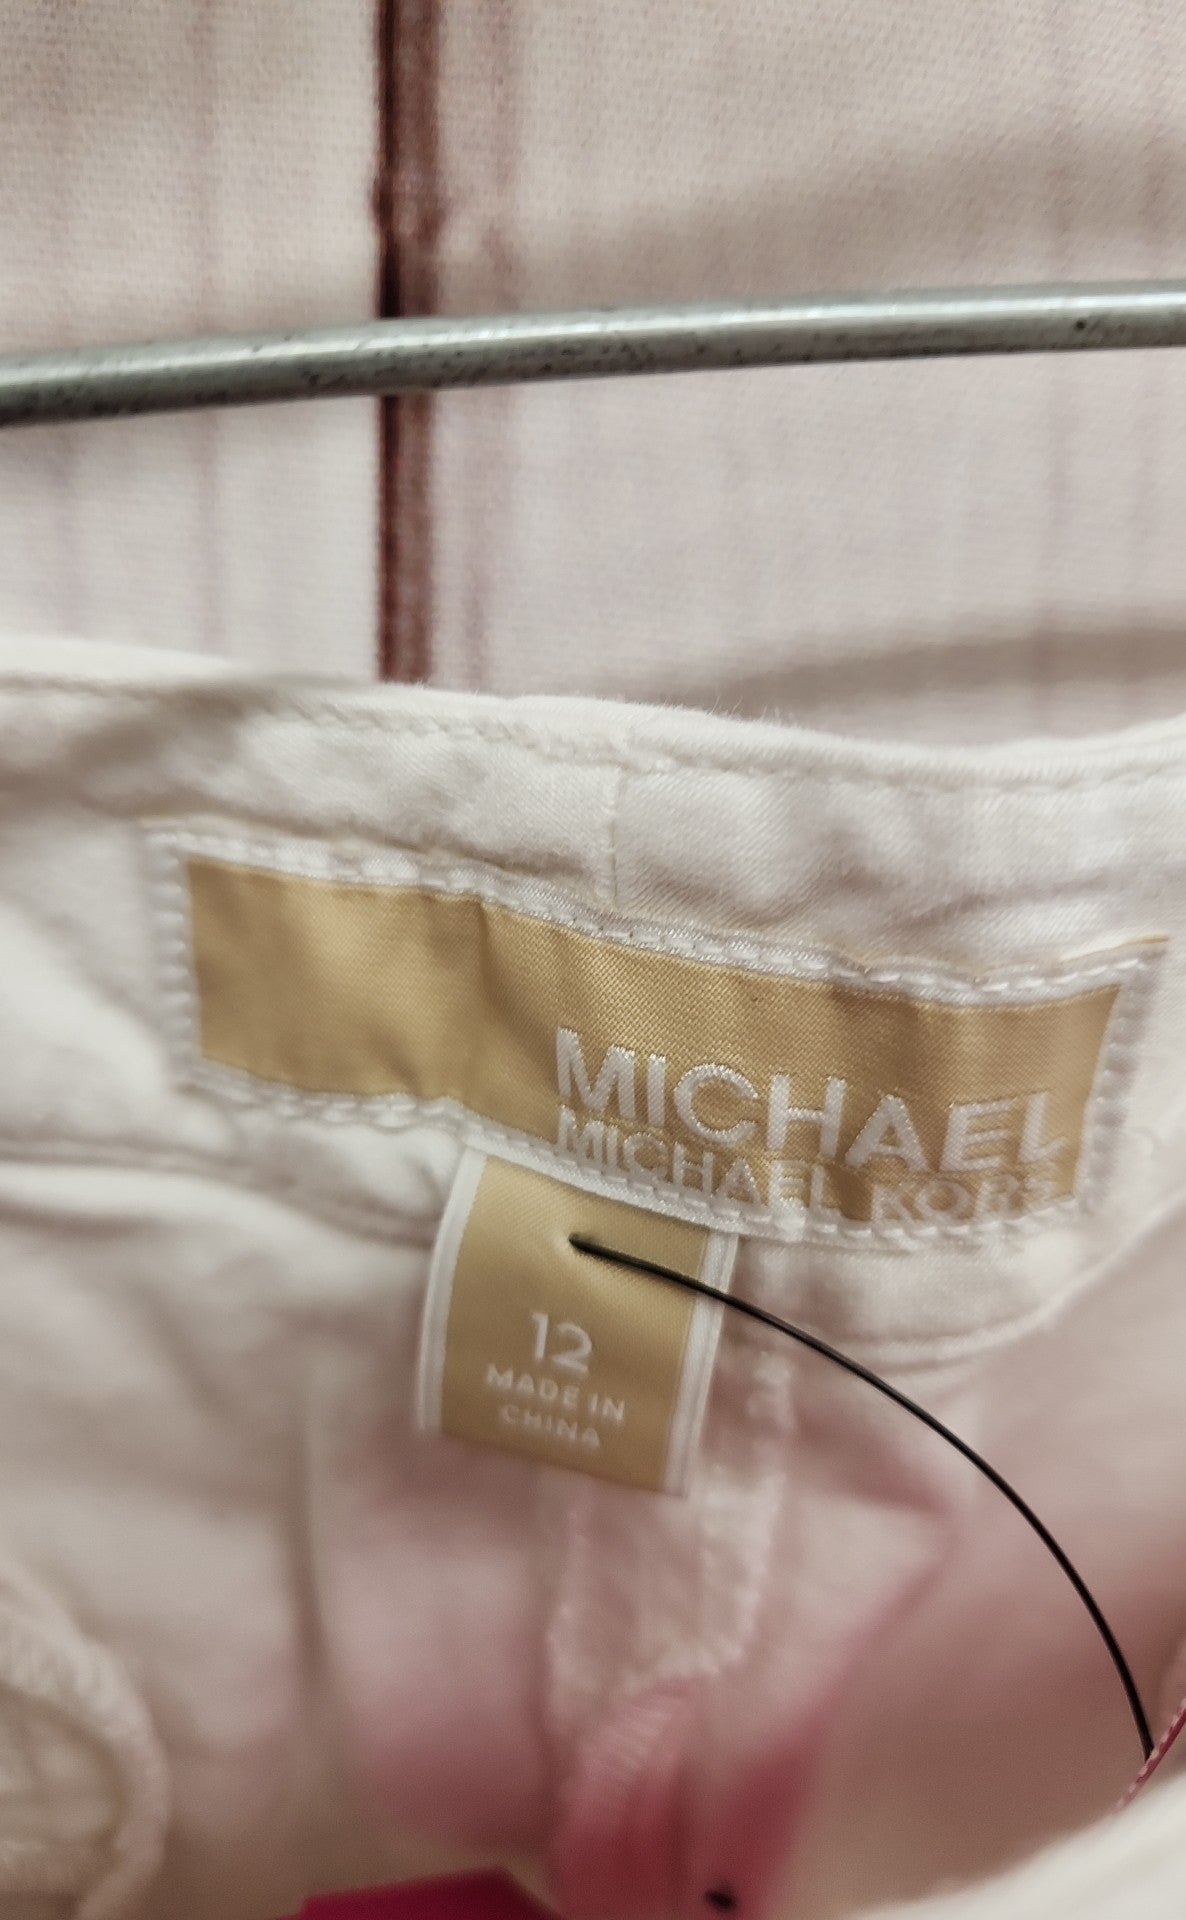 Michael Kors Women's Size 12 White Shorts